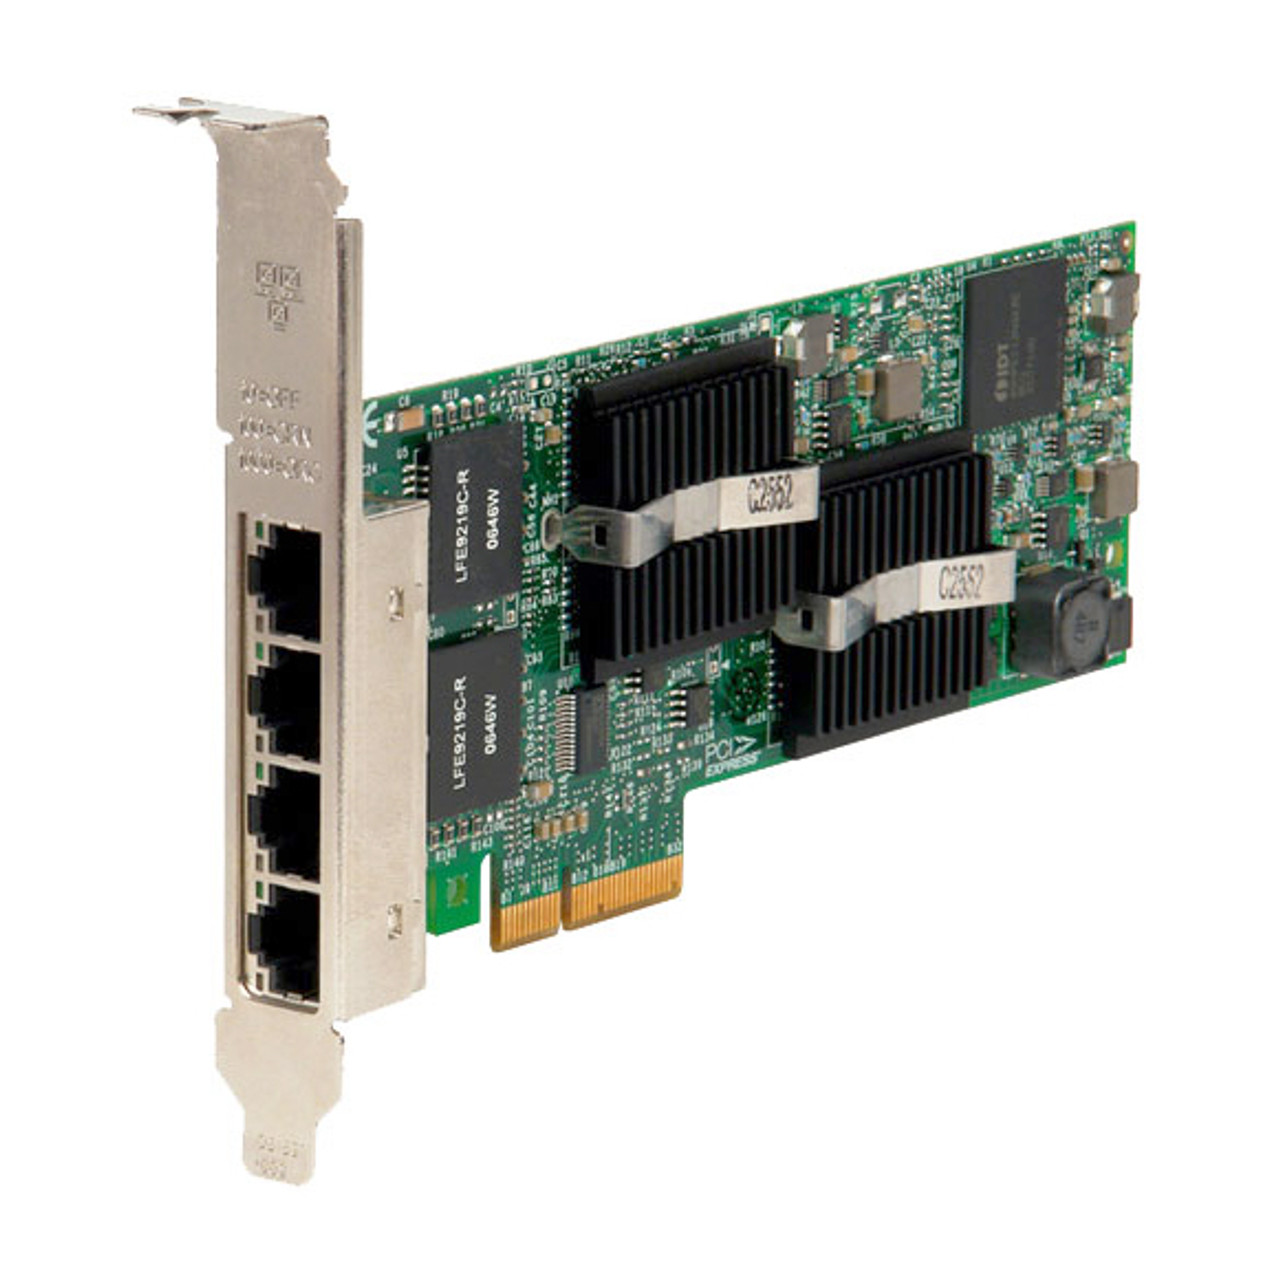 EXPI9404VT-DELL Dell Quad-Ports RJ-45 1Gbps 10Base-T/100Base-TX/1000Base-T Gigabit Ethernet PCI Express 1.1 x4 Server Network Adapter by Intel